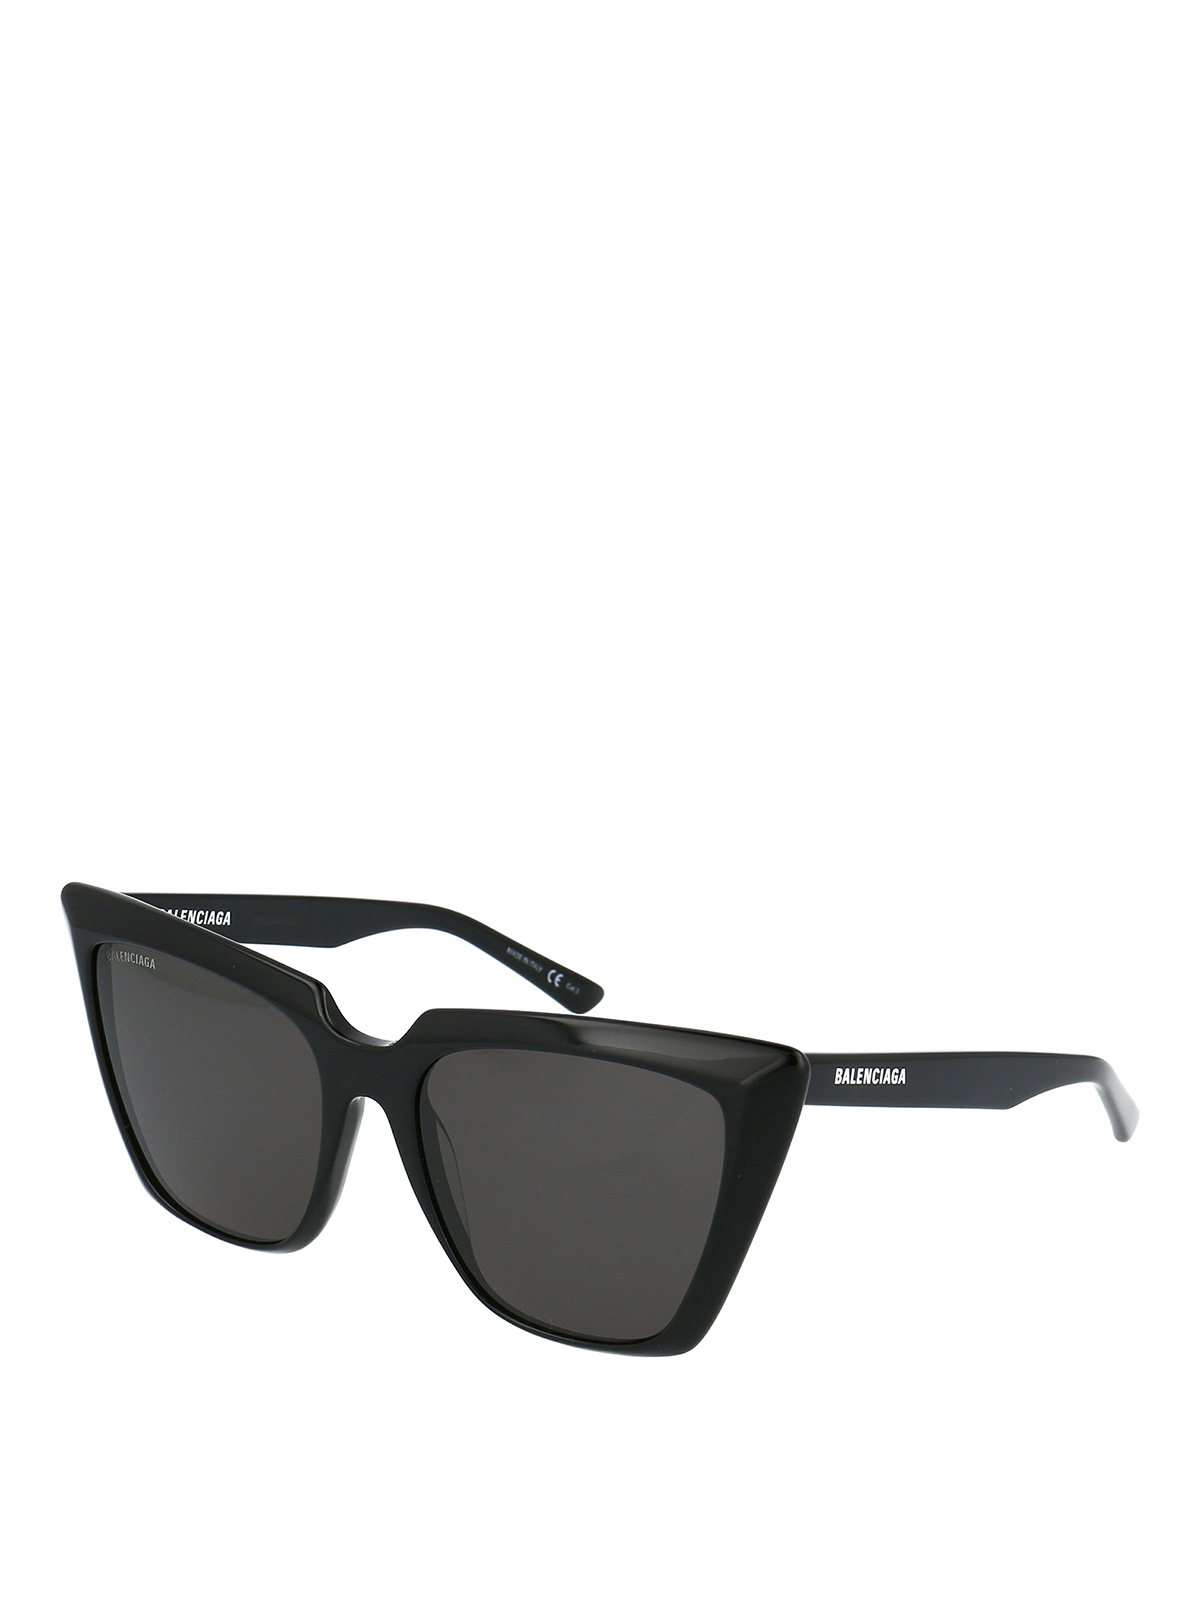 Balenciaga Black Squared Cat-eye Sunglasses